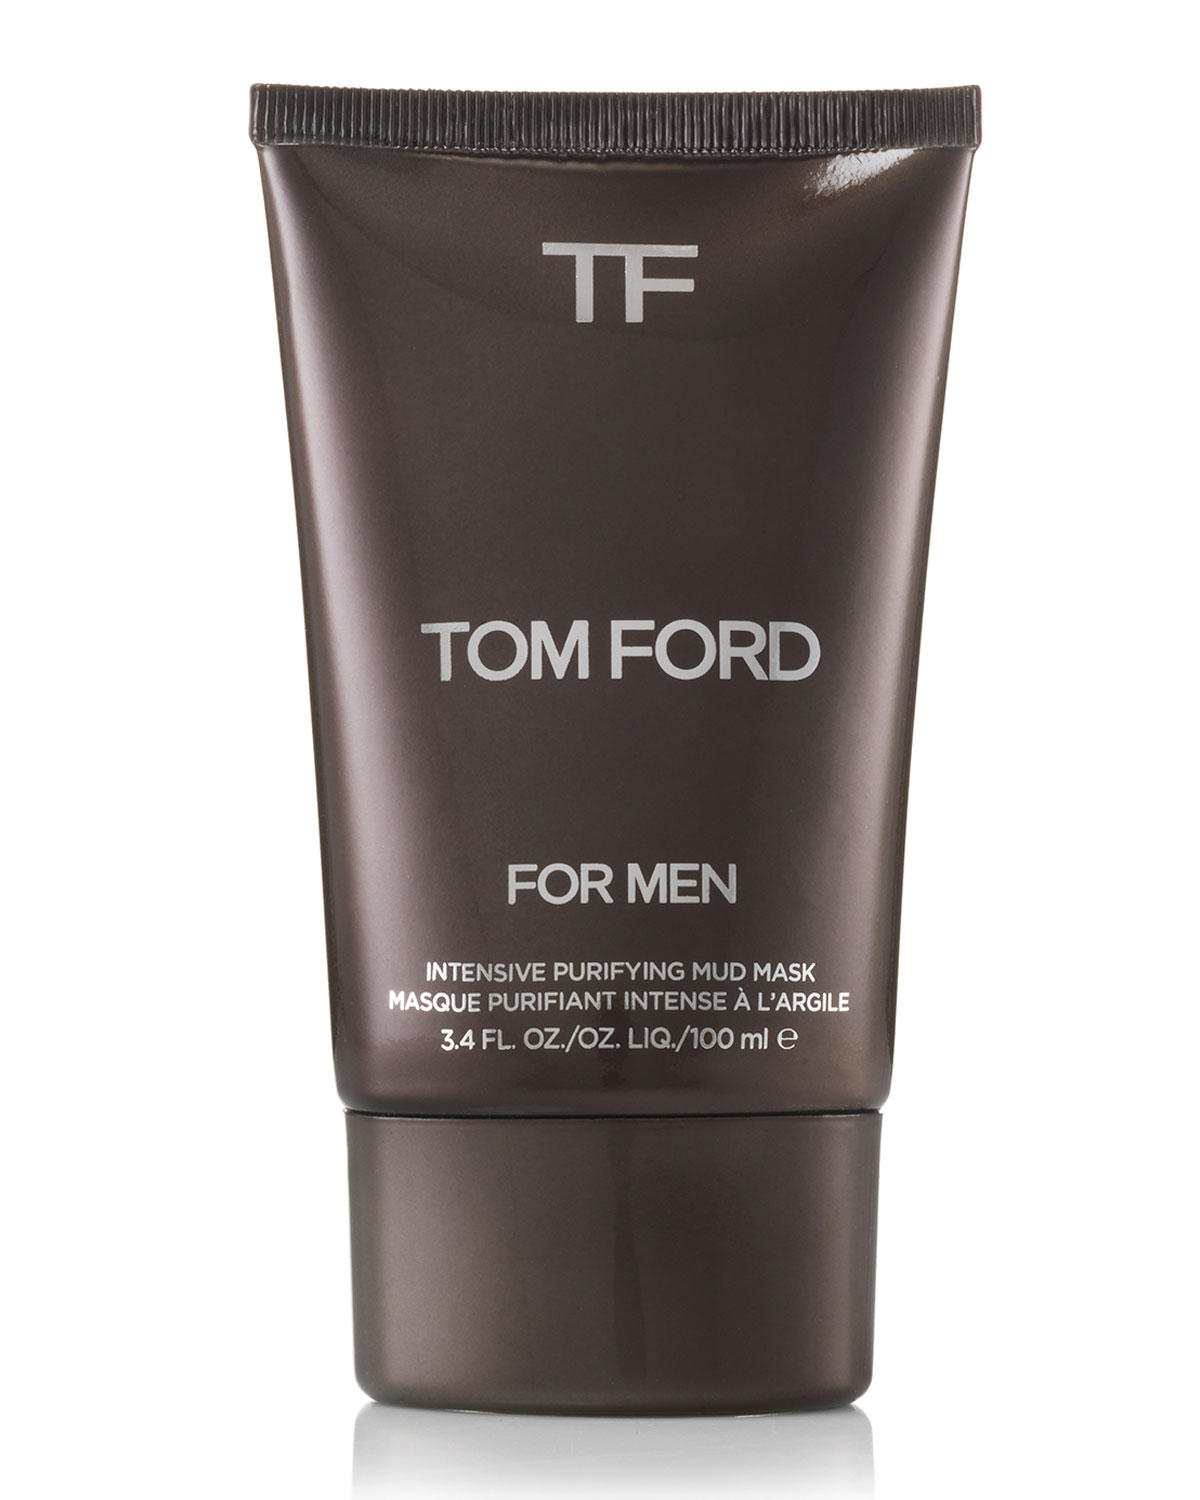 Tom Ford маска for men Intensive Purifying Mud Mask. Tom Ford for men. Purifying Mud Mask. Tom Ford 002. Intensive purifying gel